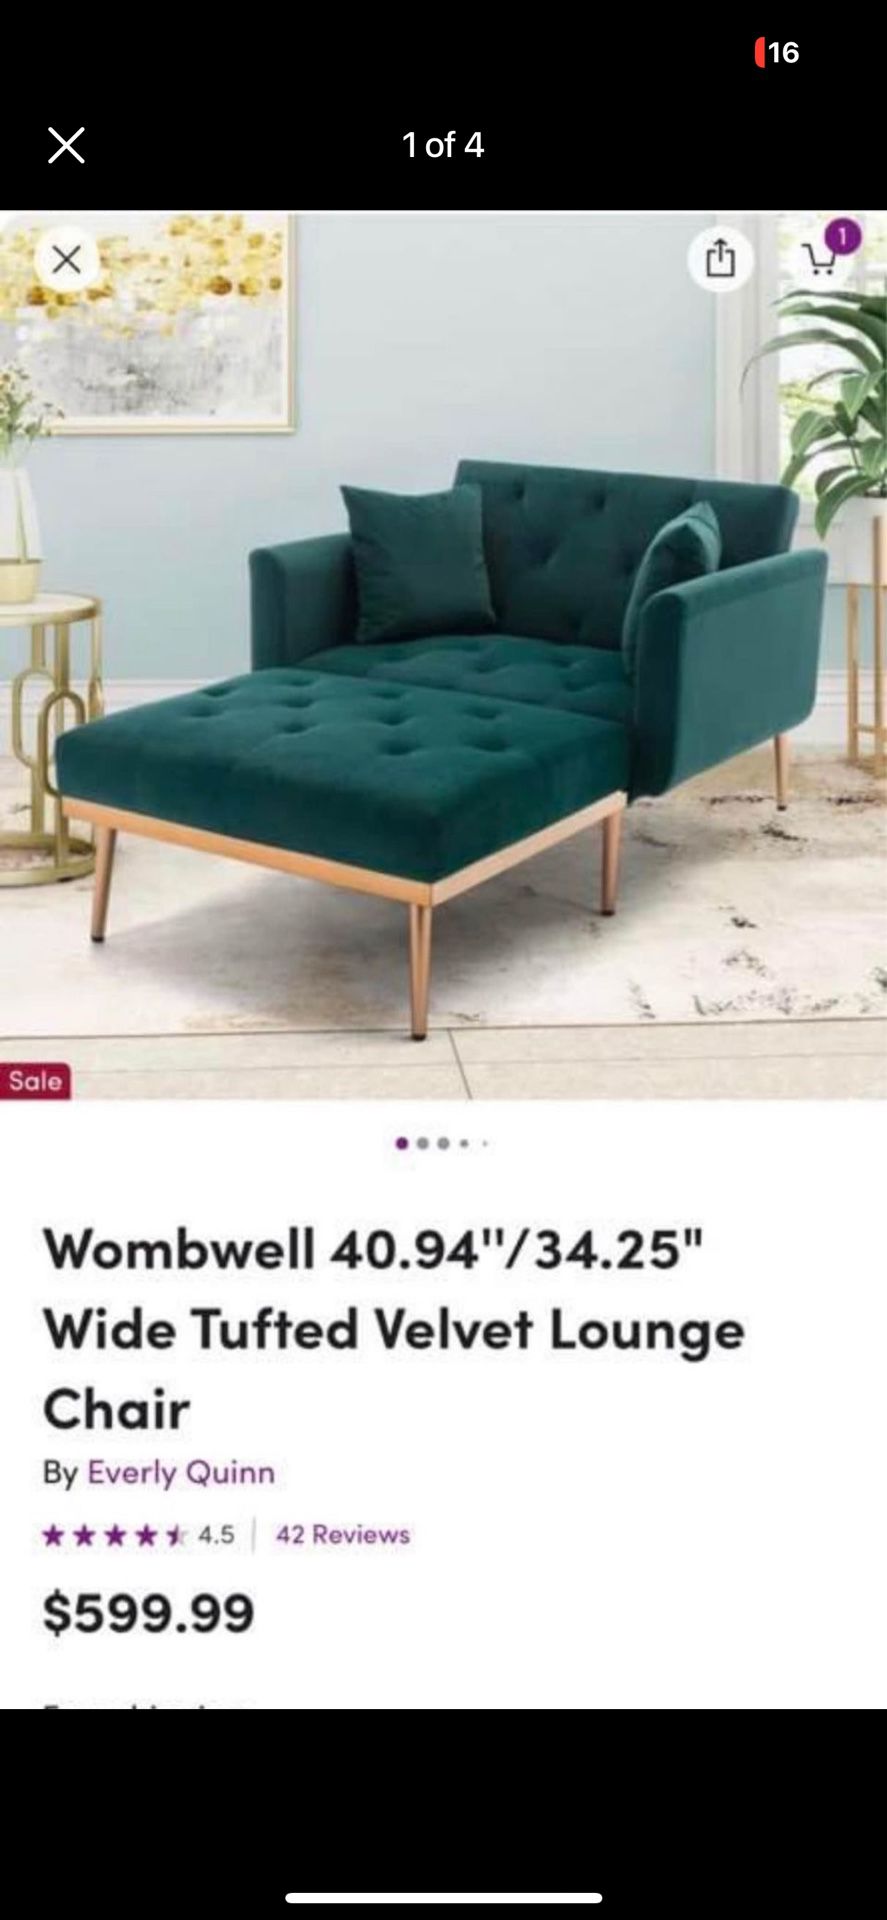 Aqua Green Velvet Chair W. Gold trim 